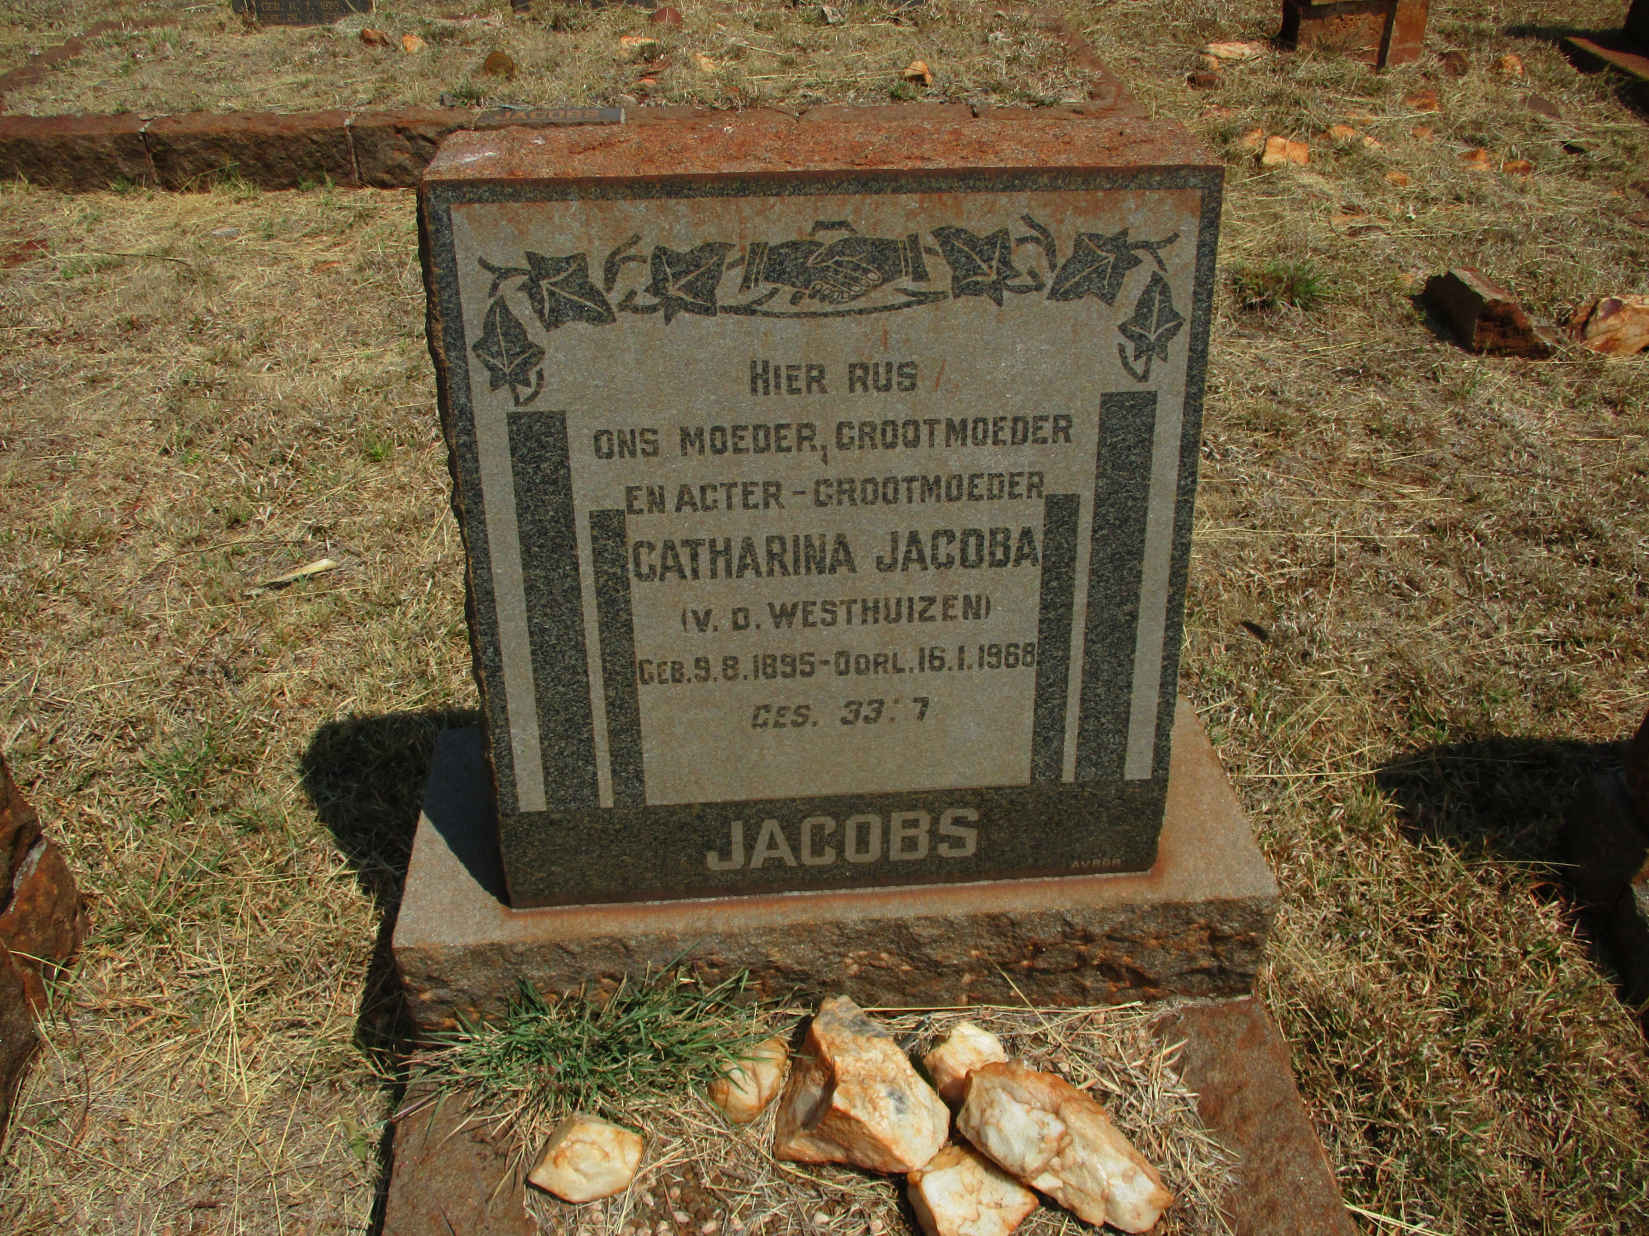 JACOBS Catharina Jacoba nee V.D. WESTHUIZEN 1895-1968